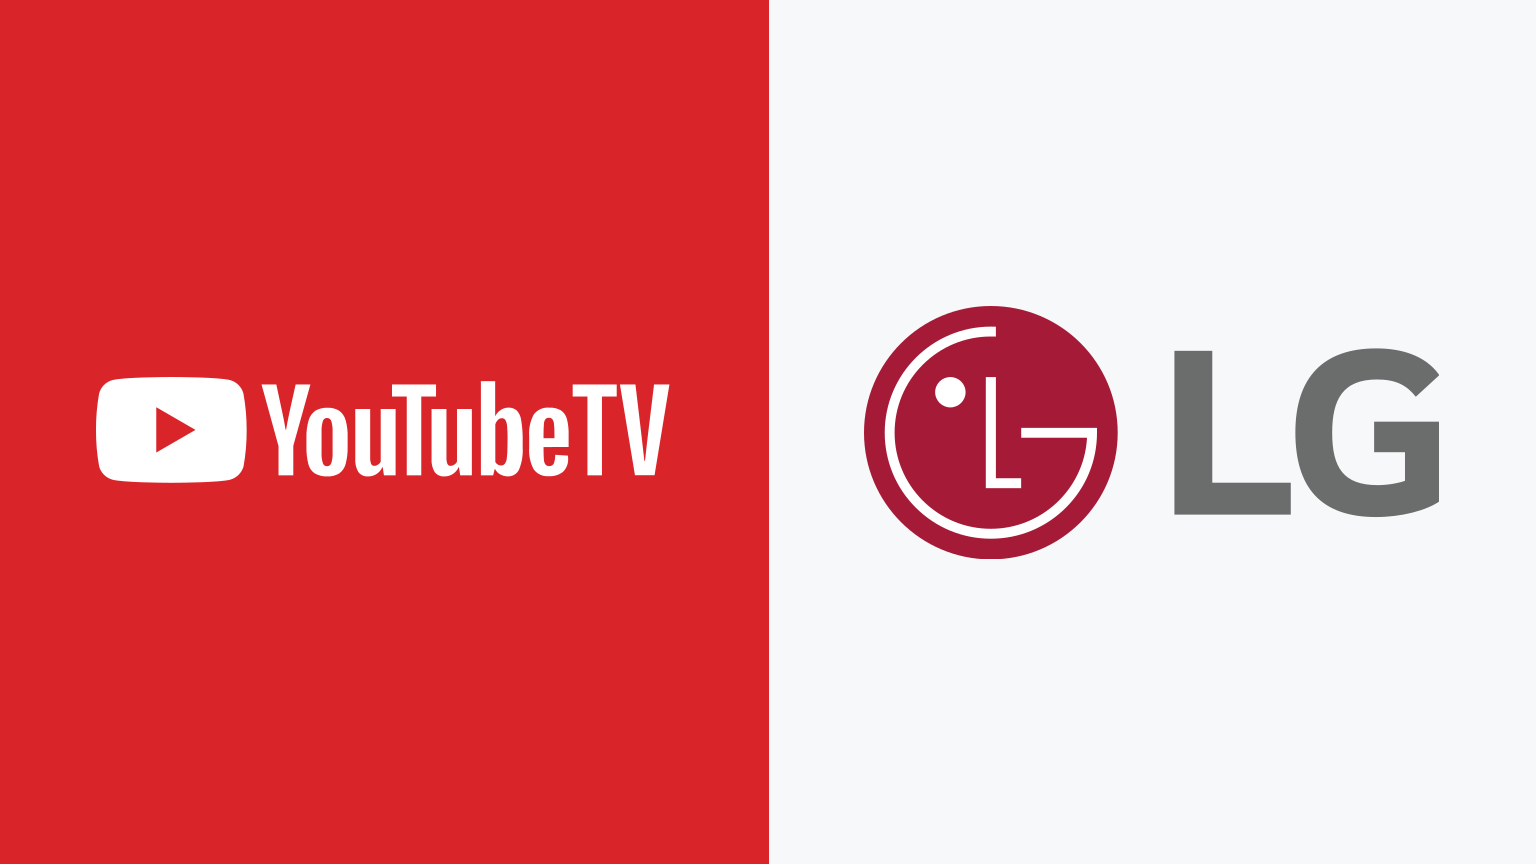 How Do I Get Youtube TV On My LG Smart TV